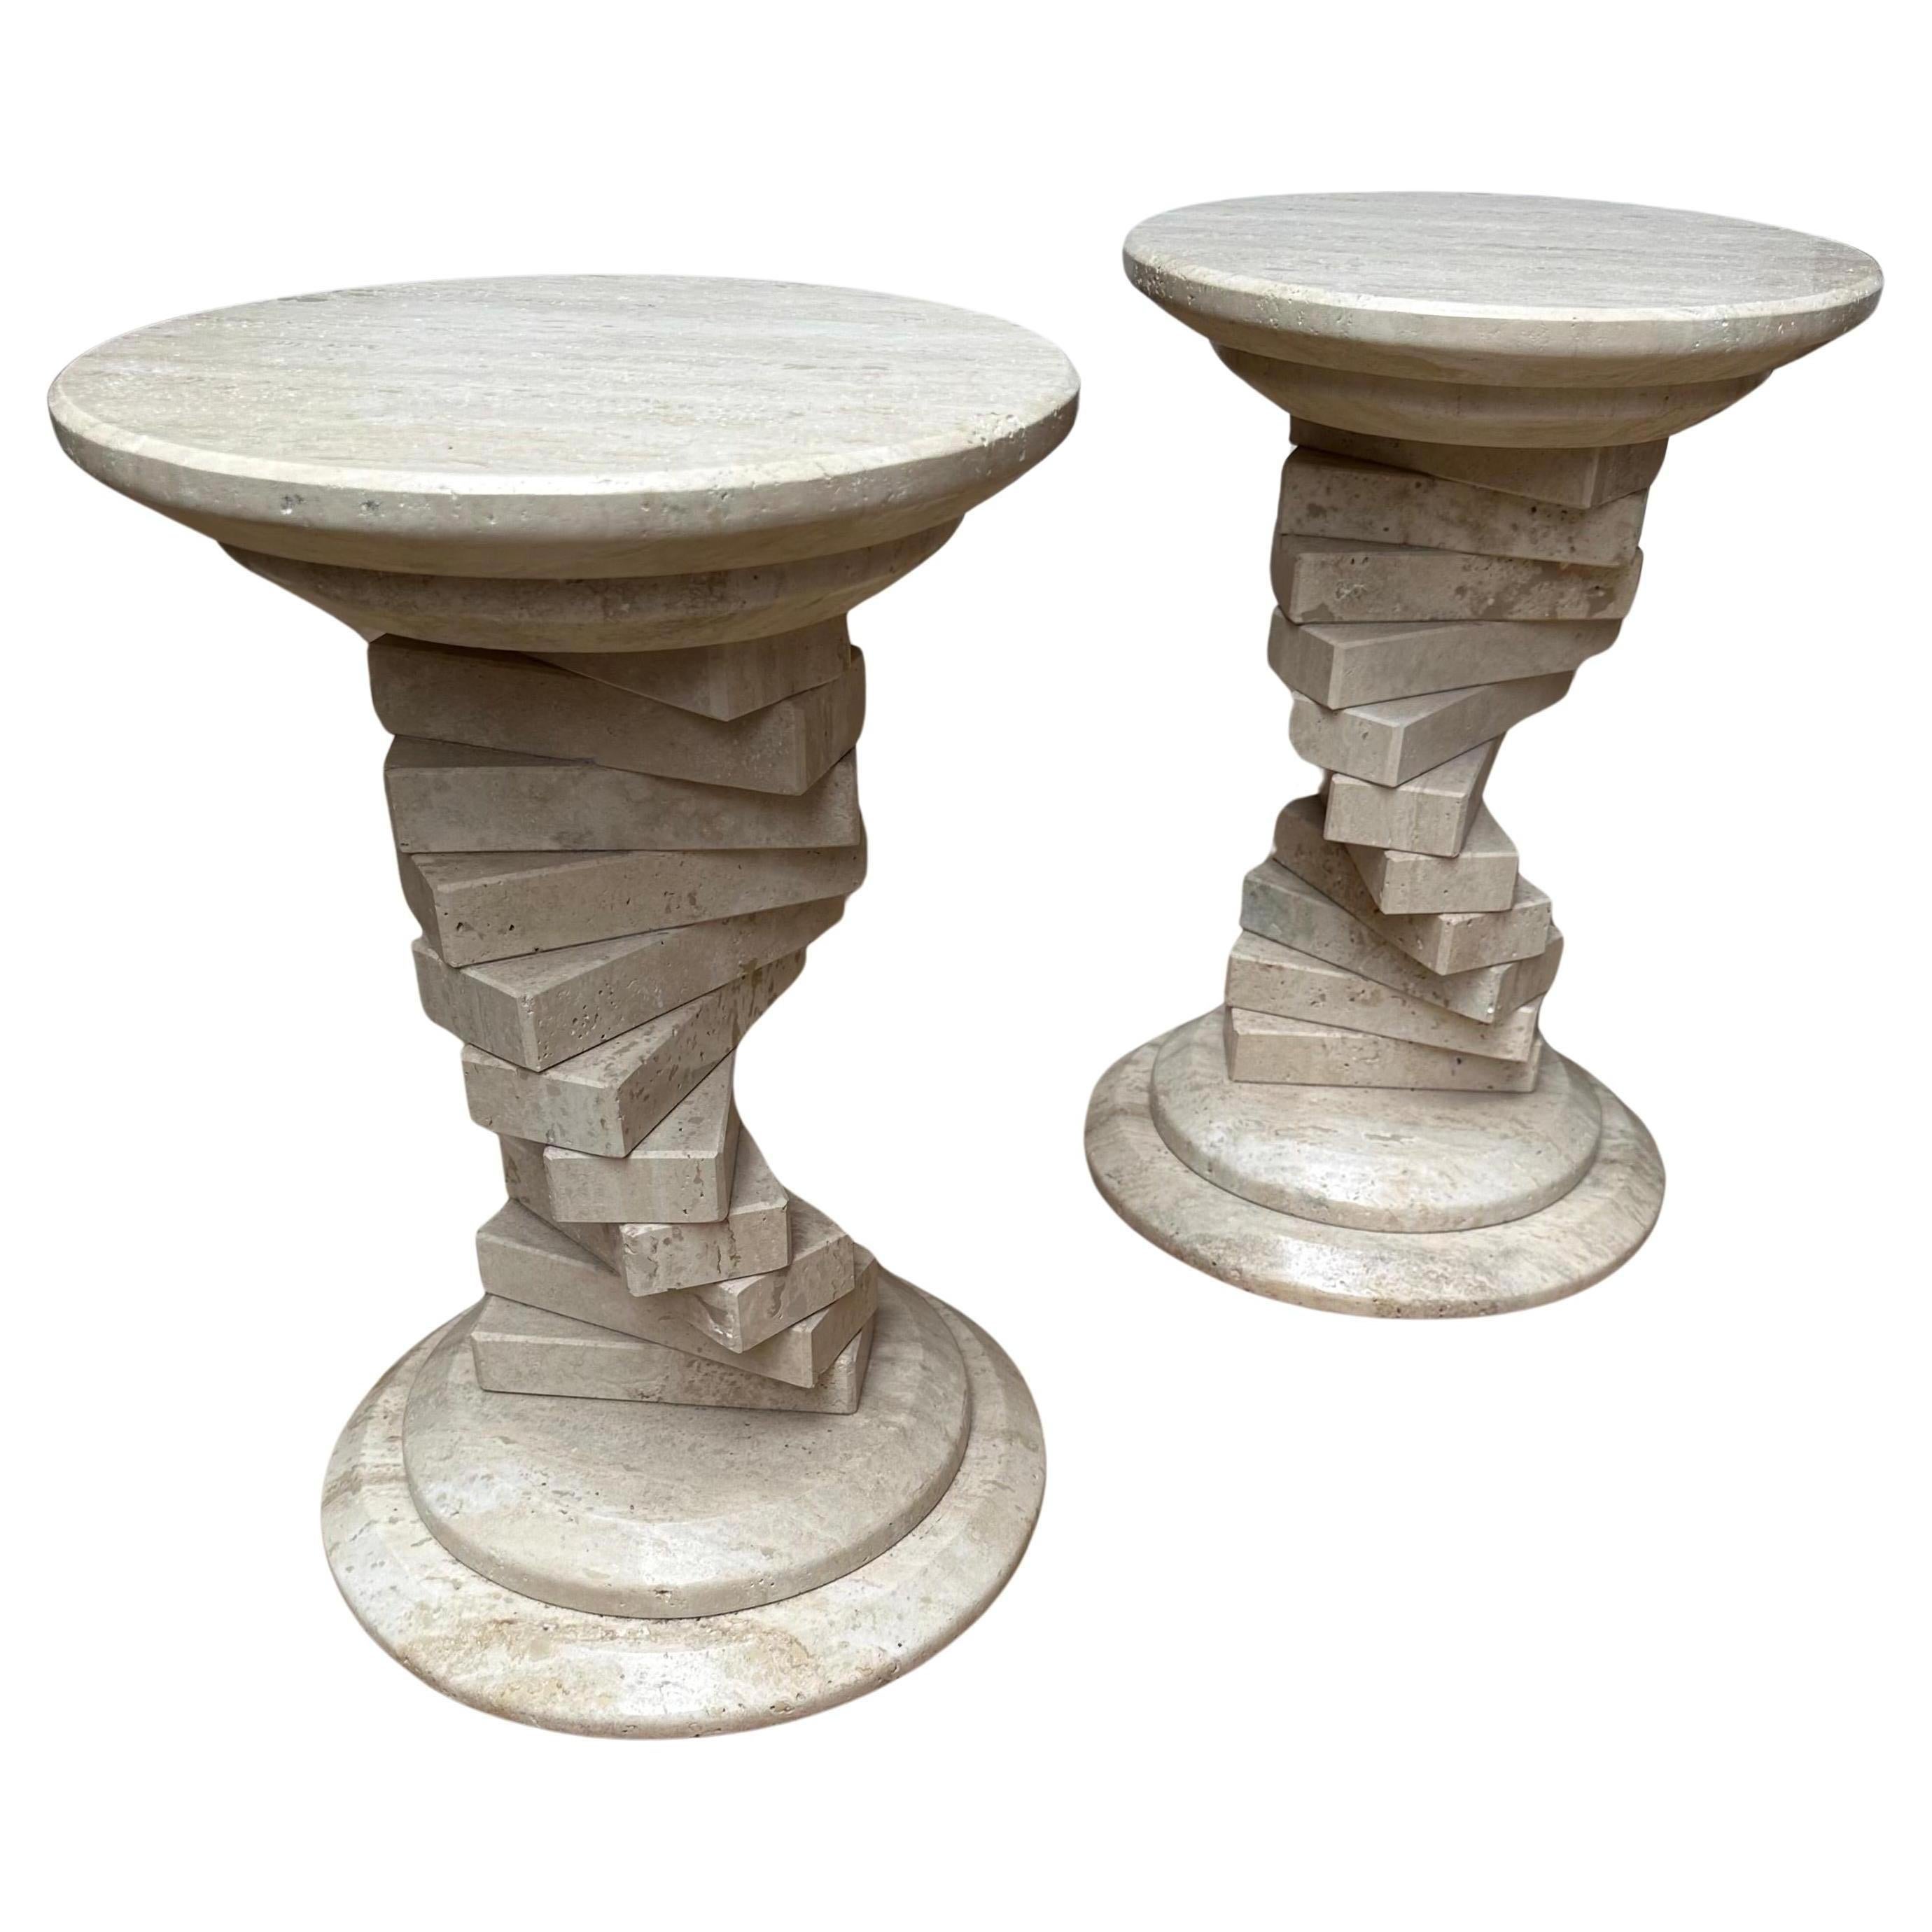 Stunning Pair of Italian Travertine Circular End Tables w. Stacked Blocks Design